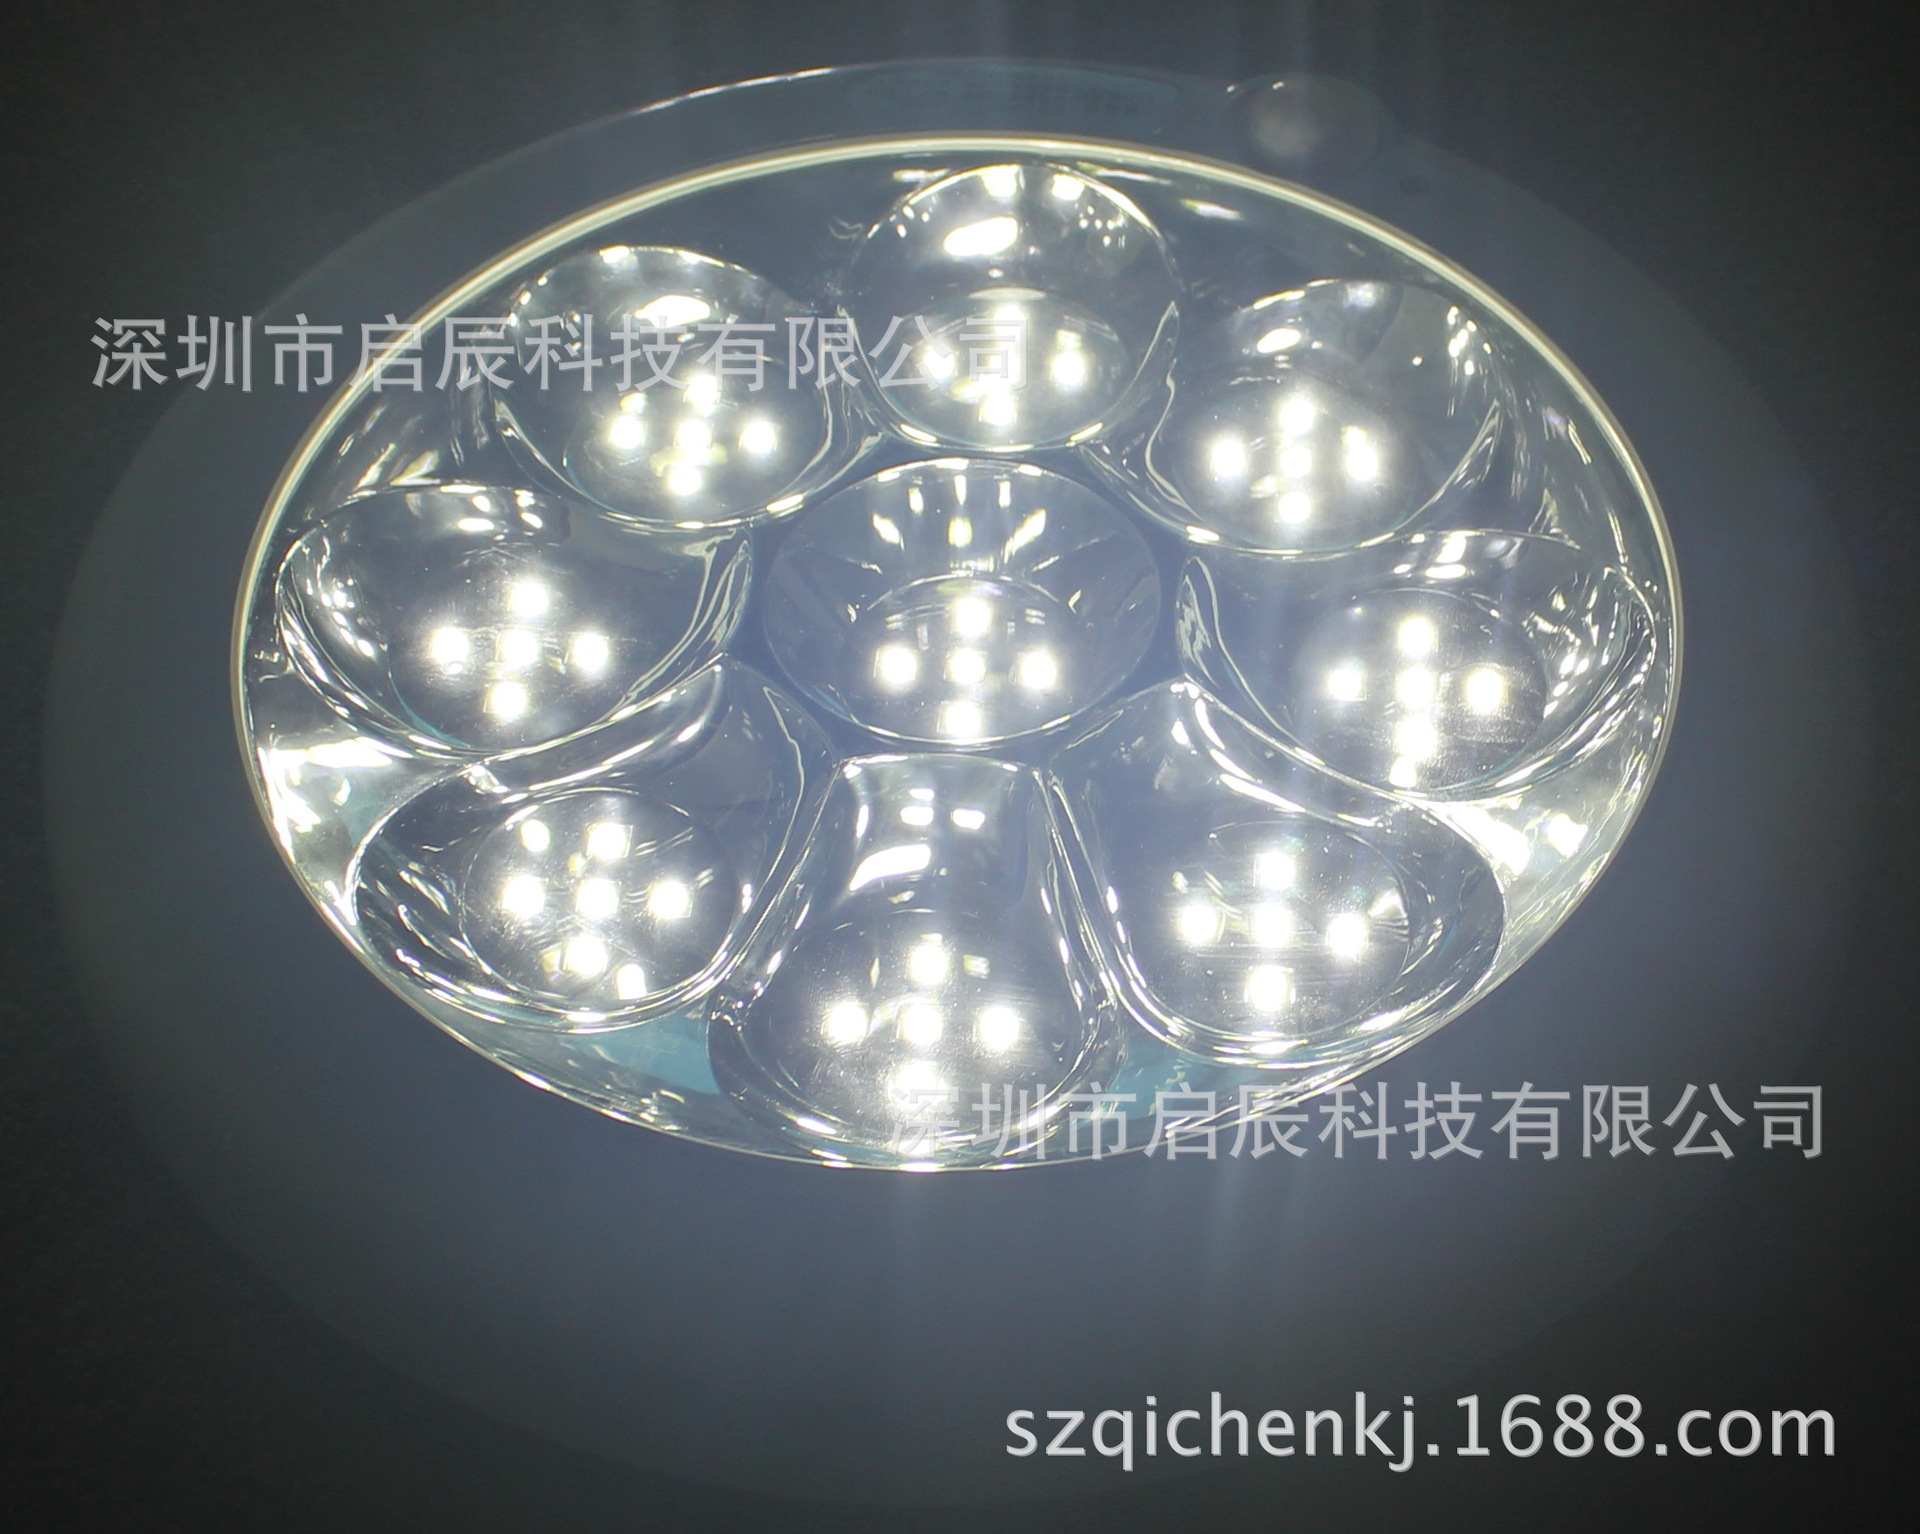 Infrared sensor light_Shenzhen Qi-chen Technology Co., Ltd.